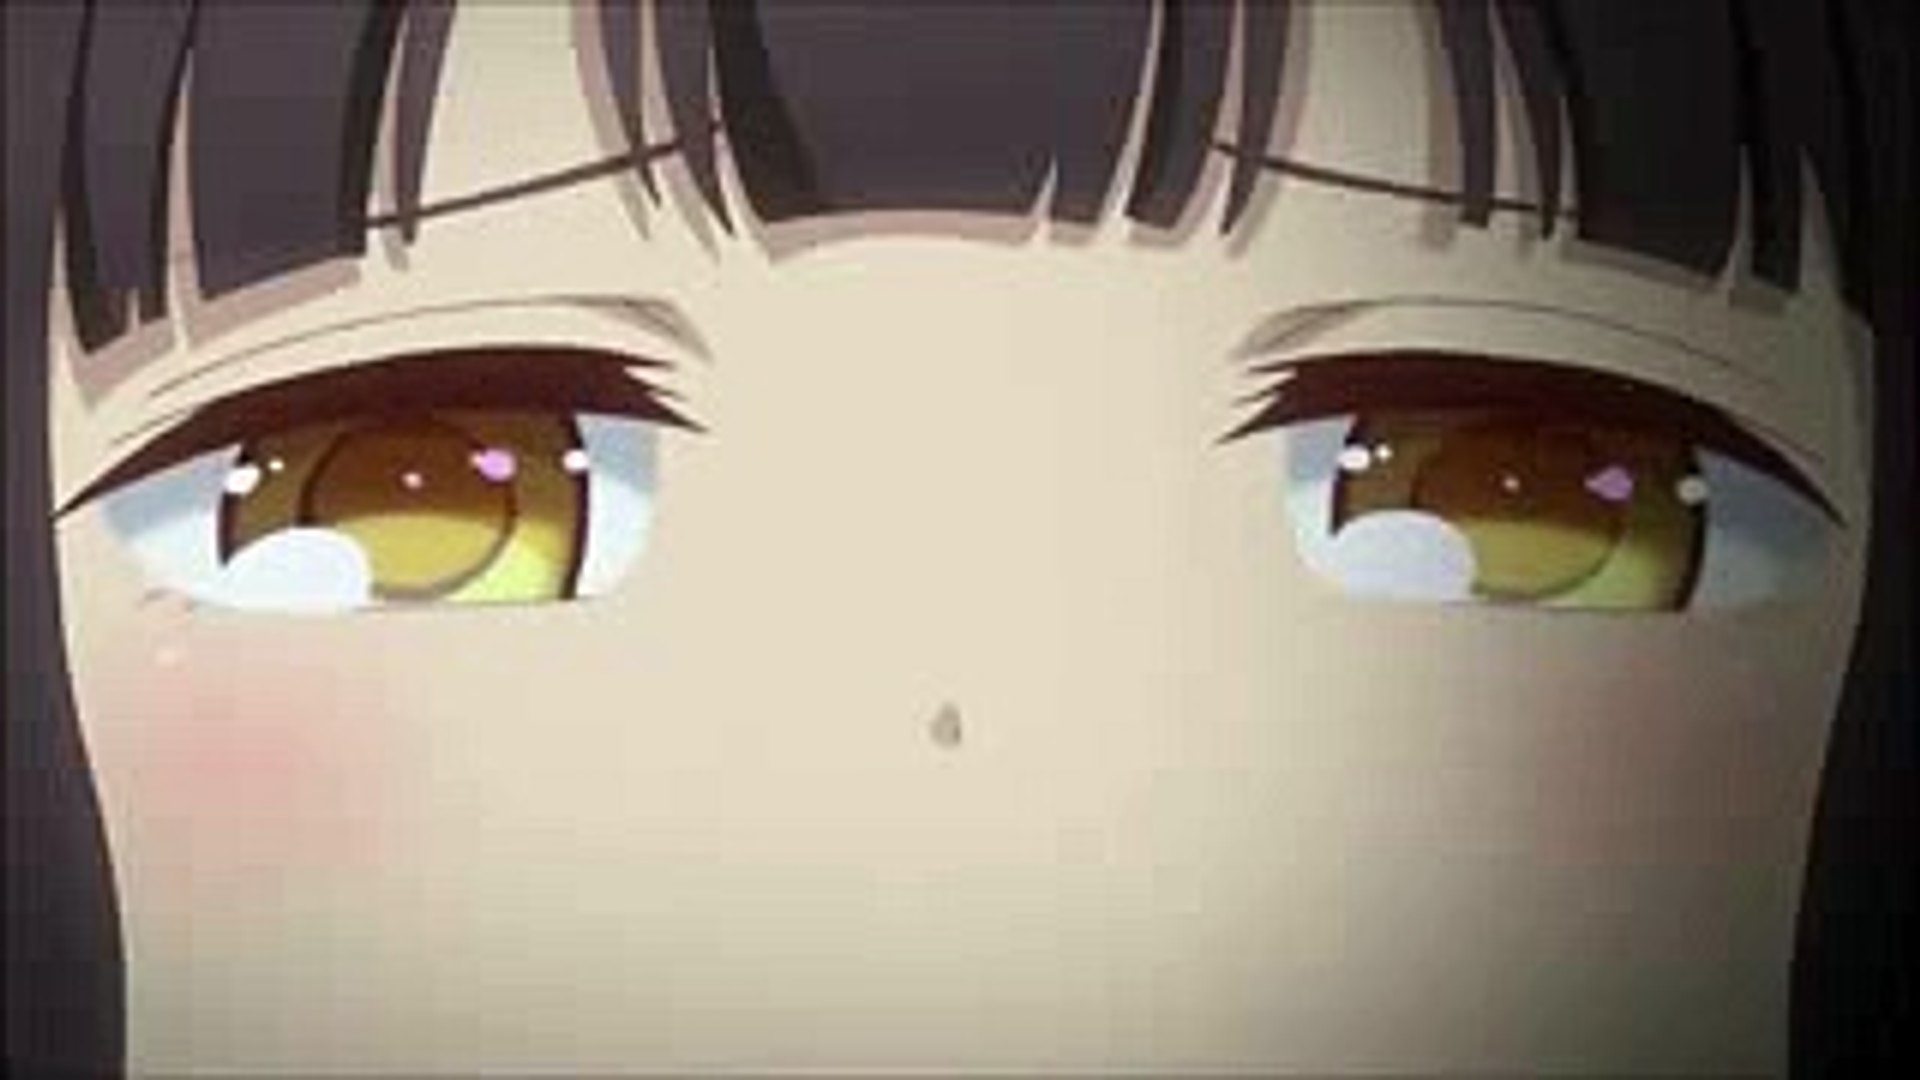 Trailer 2 de Harukana Receive, ~[Grupo DINAMO]~, *The Japan & Anime  Lovers*